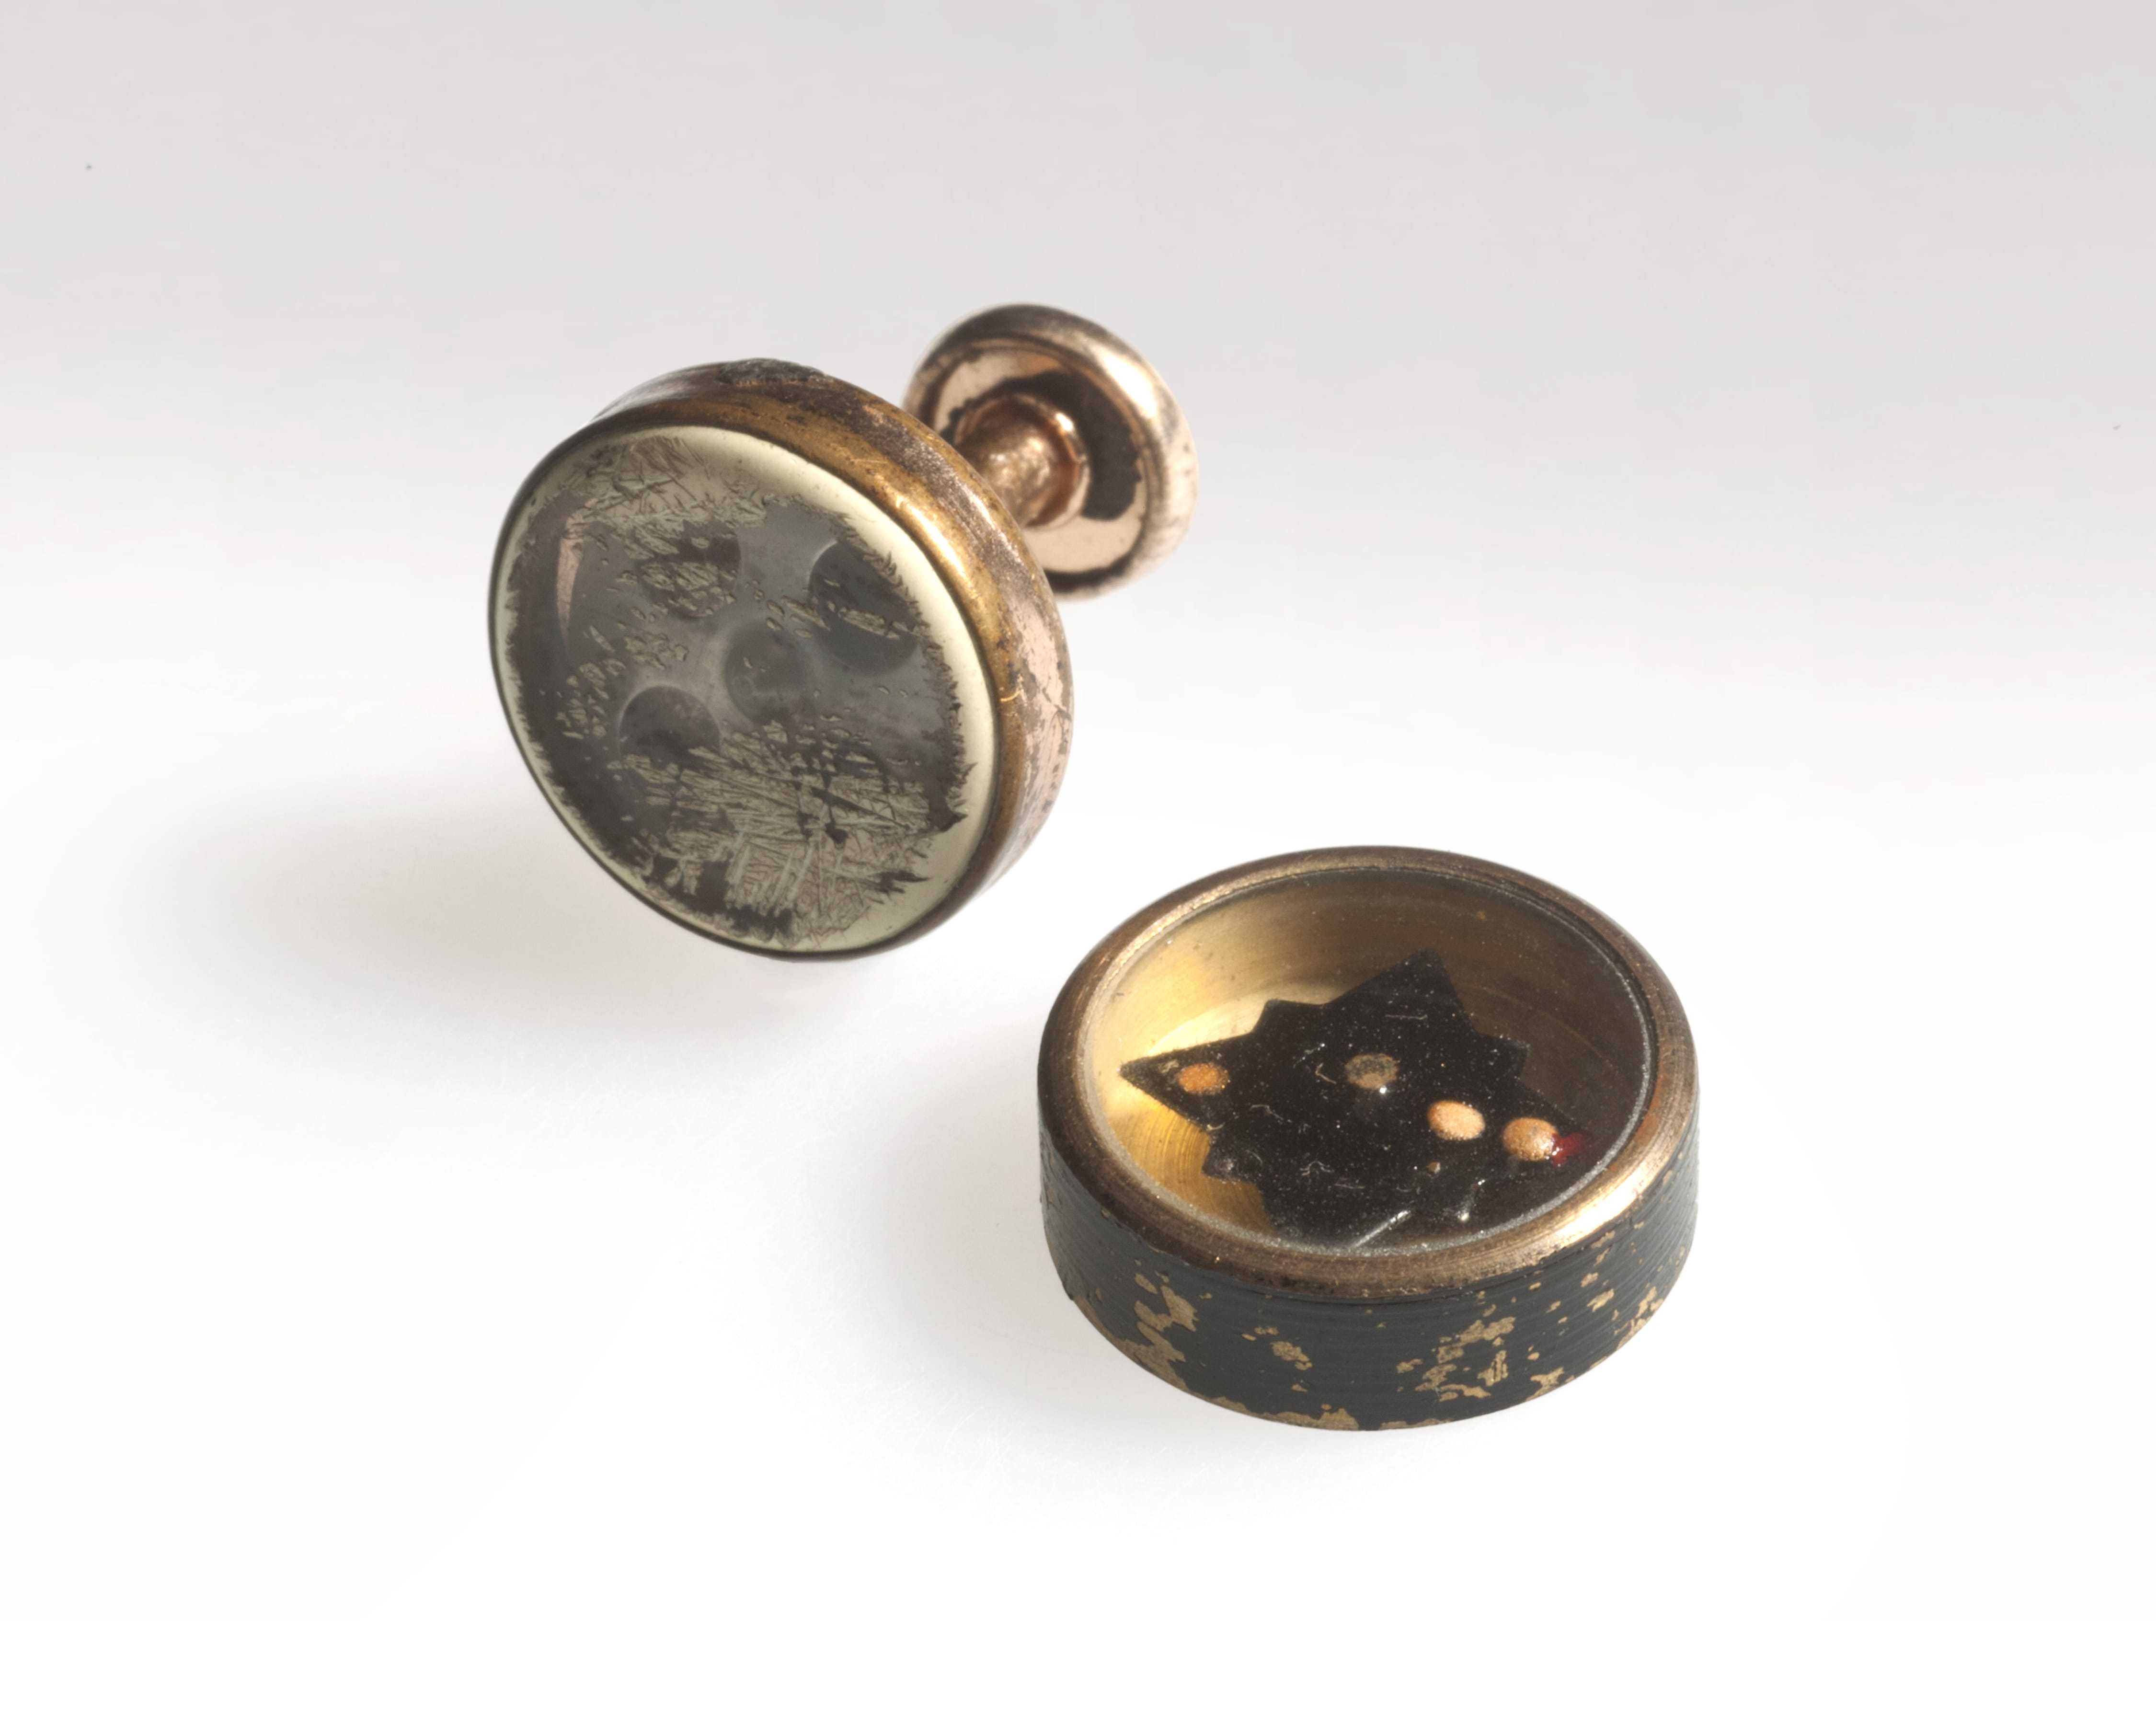 Two cufflinks that each contain a miniature compass